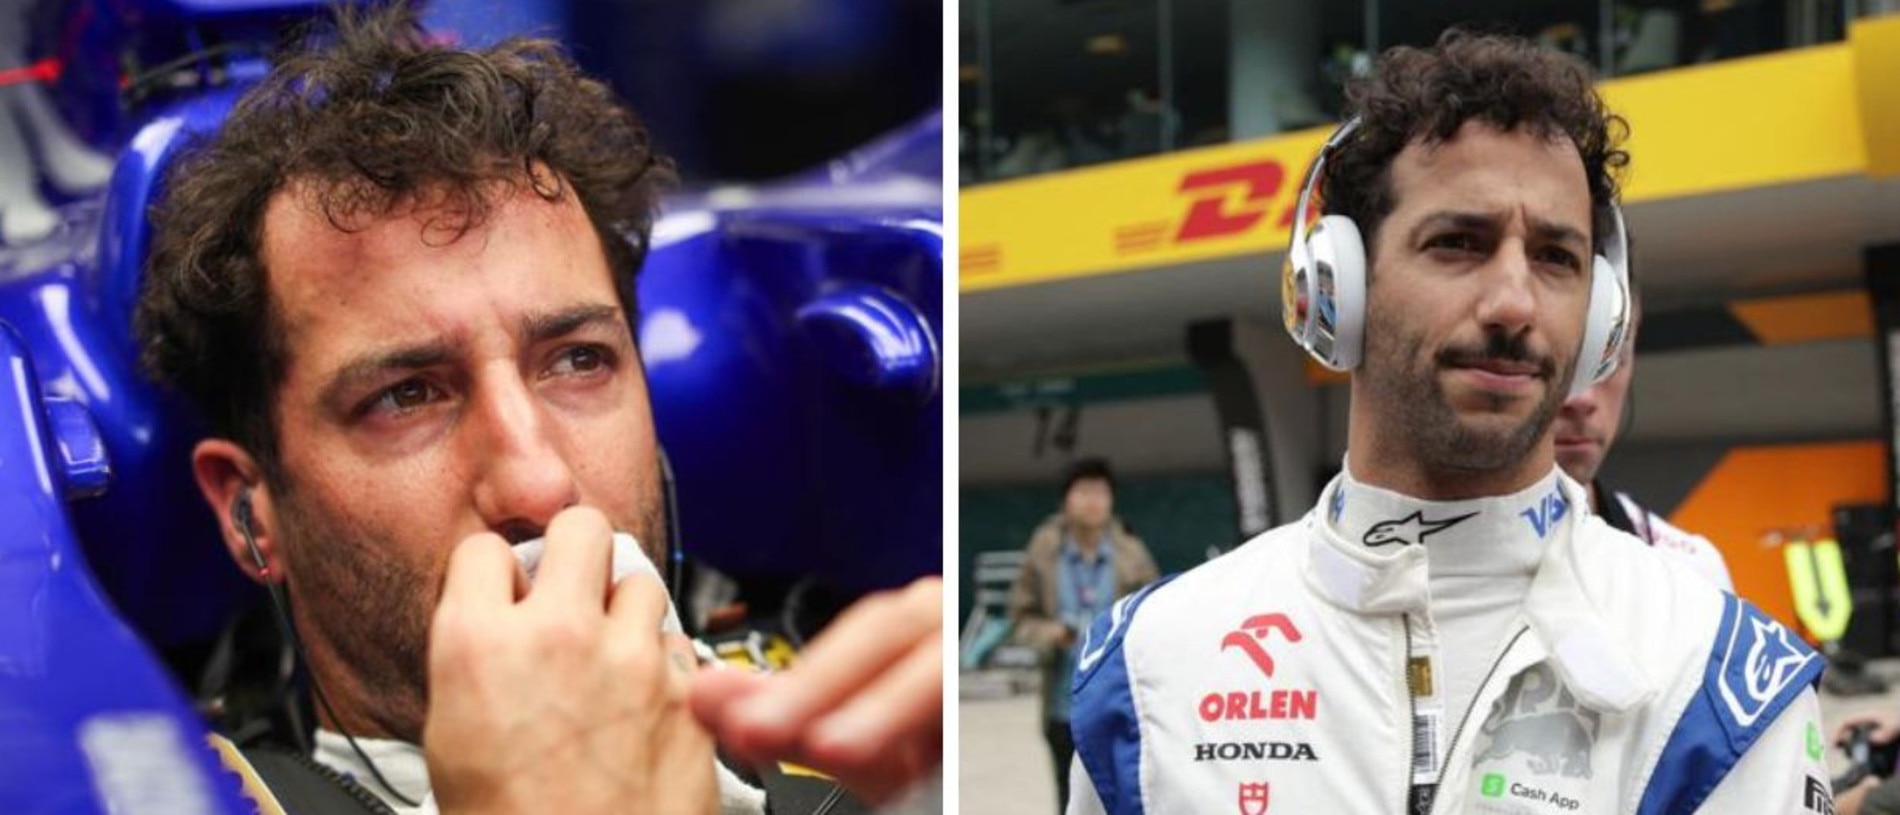 Daniel Ricciardo knows he needs better results.